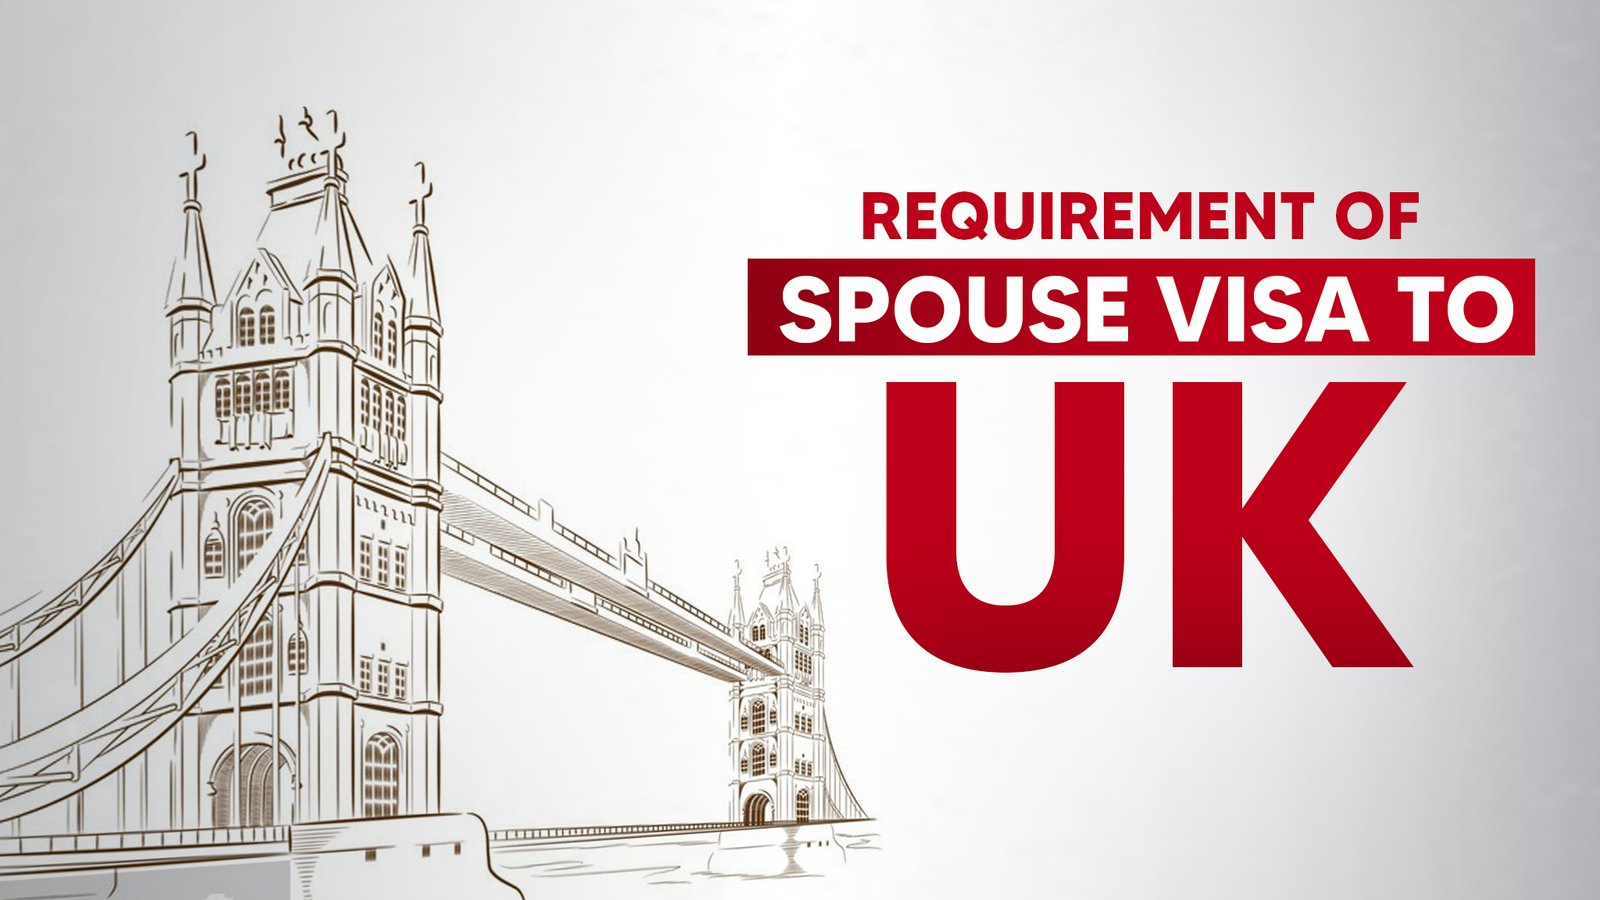 tourist visa to spouse visa uk